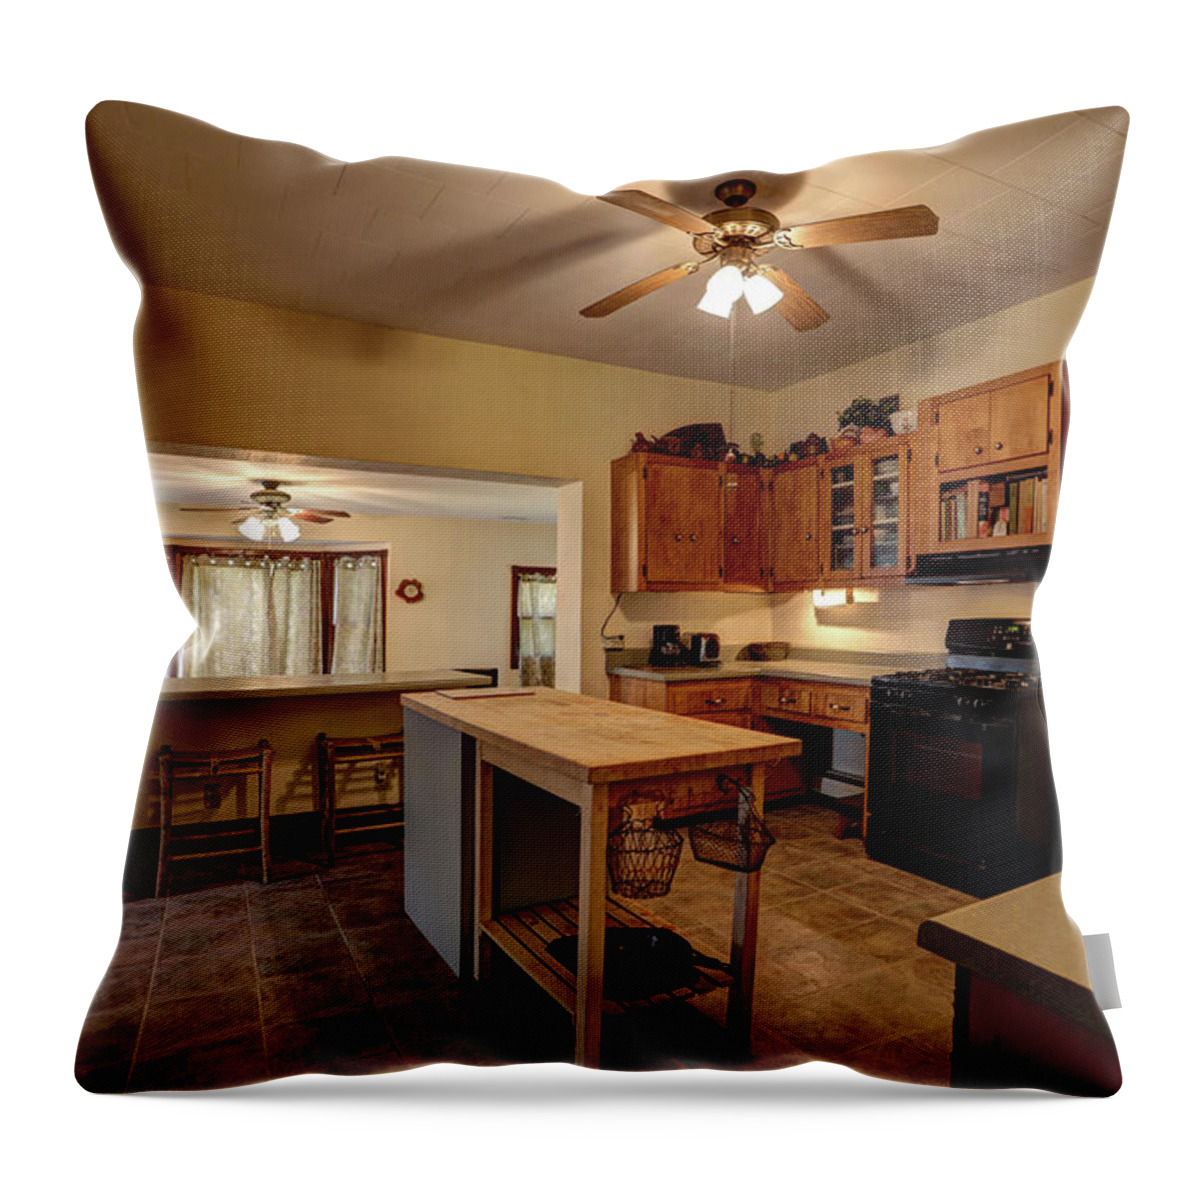 Kitchen Throw Pillow featuring the photograph Farm Kitchen by Jeff Kurtz